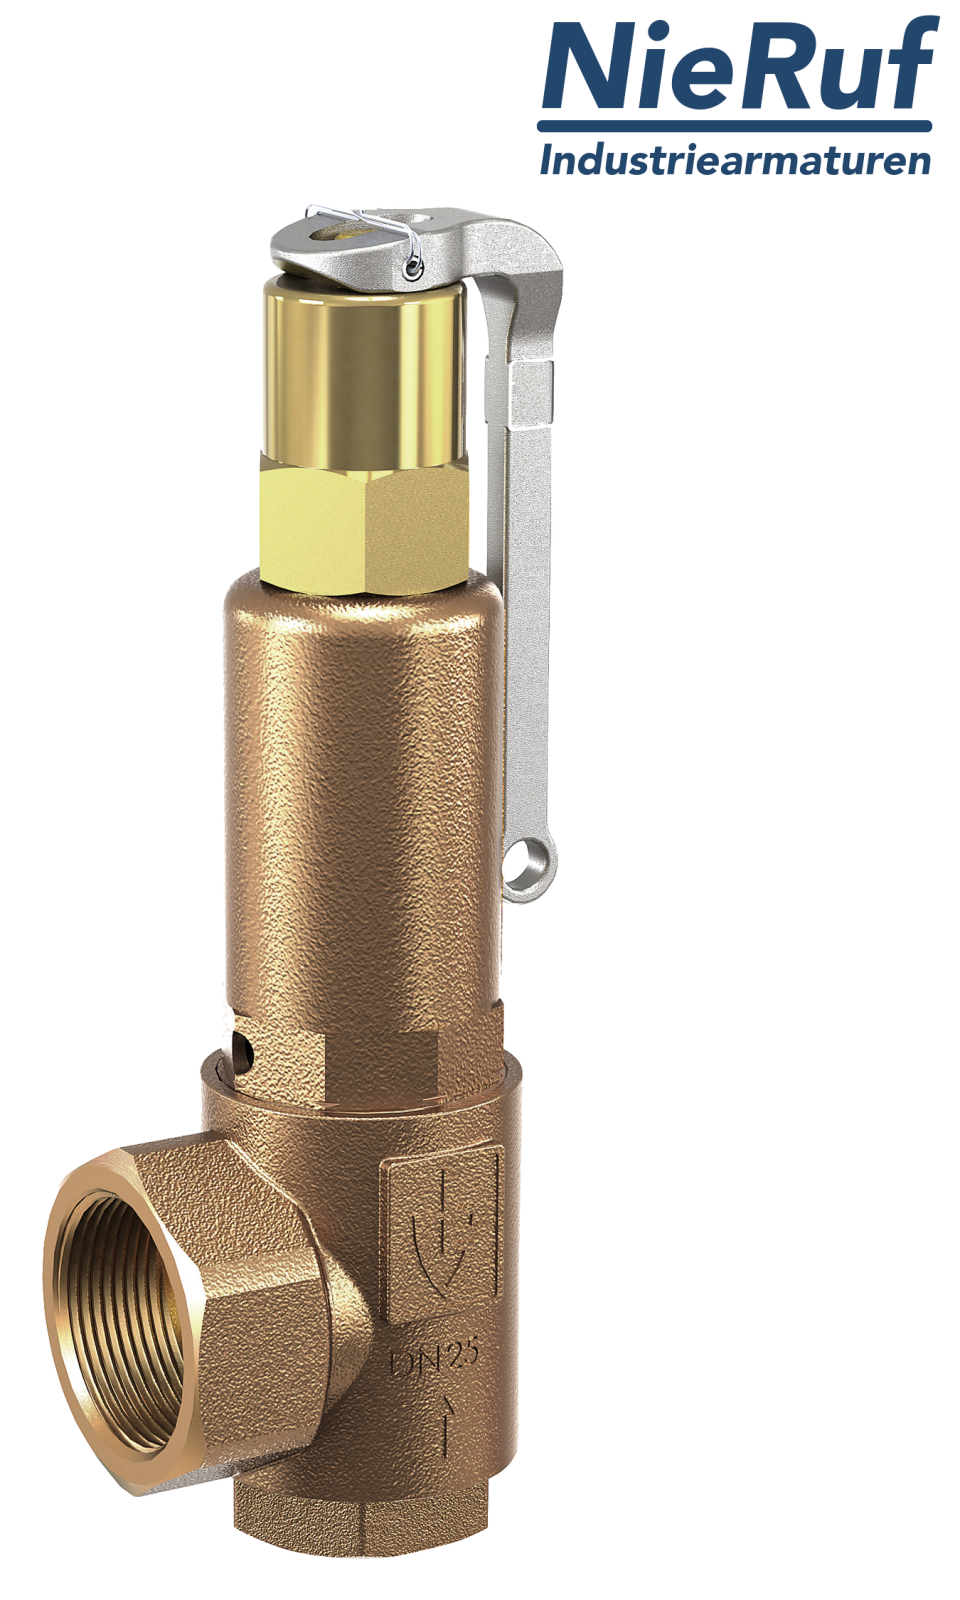 safety valve 2" x 2" fm SV03 neutral liquid media, gunmetal EPDM, with lever